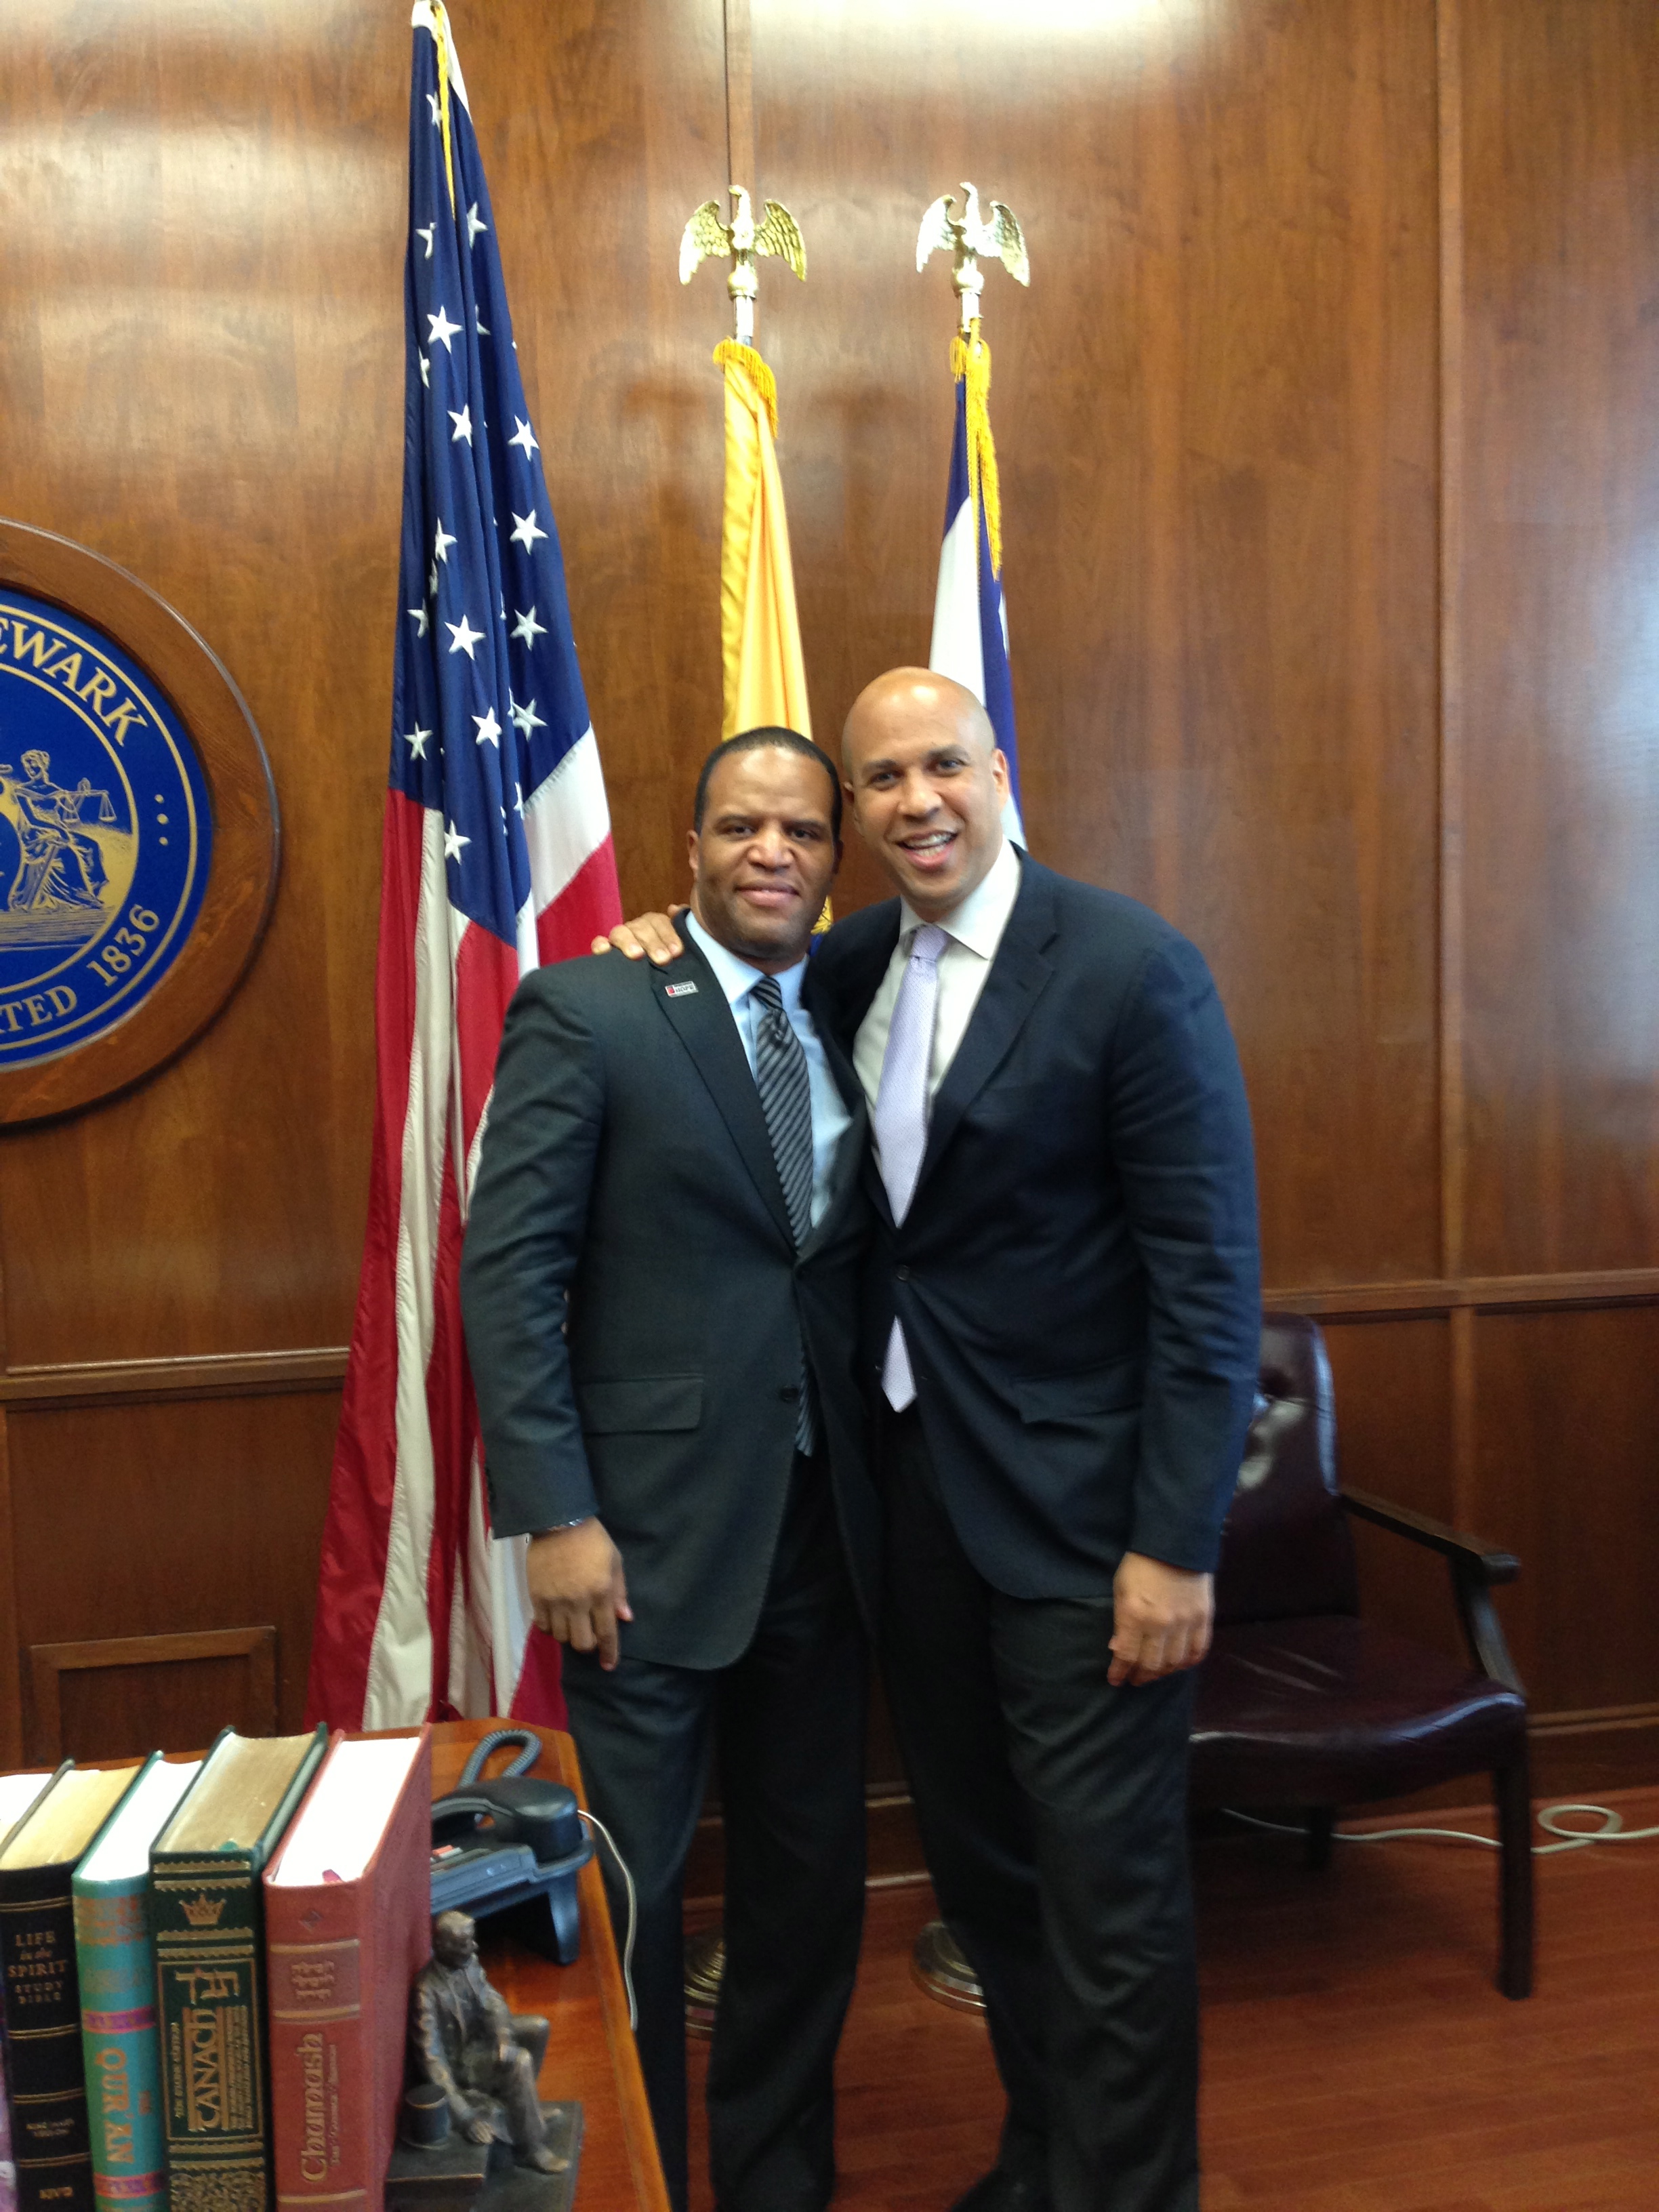 friend Mayor Cory Booker of Newark 